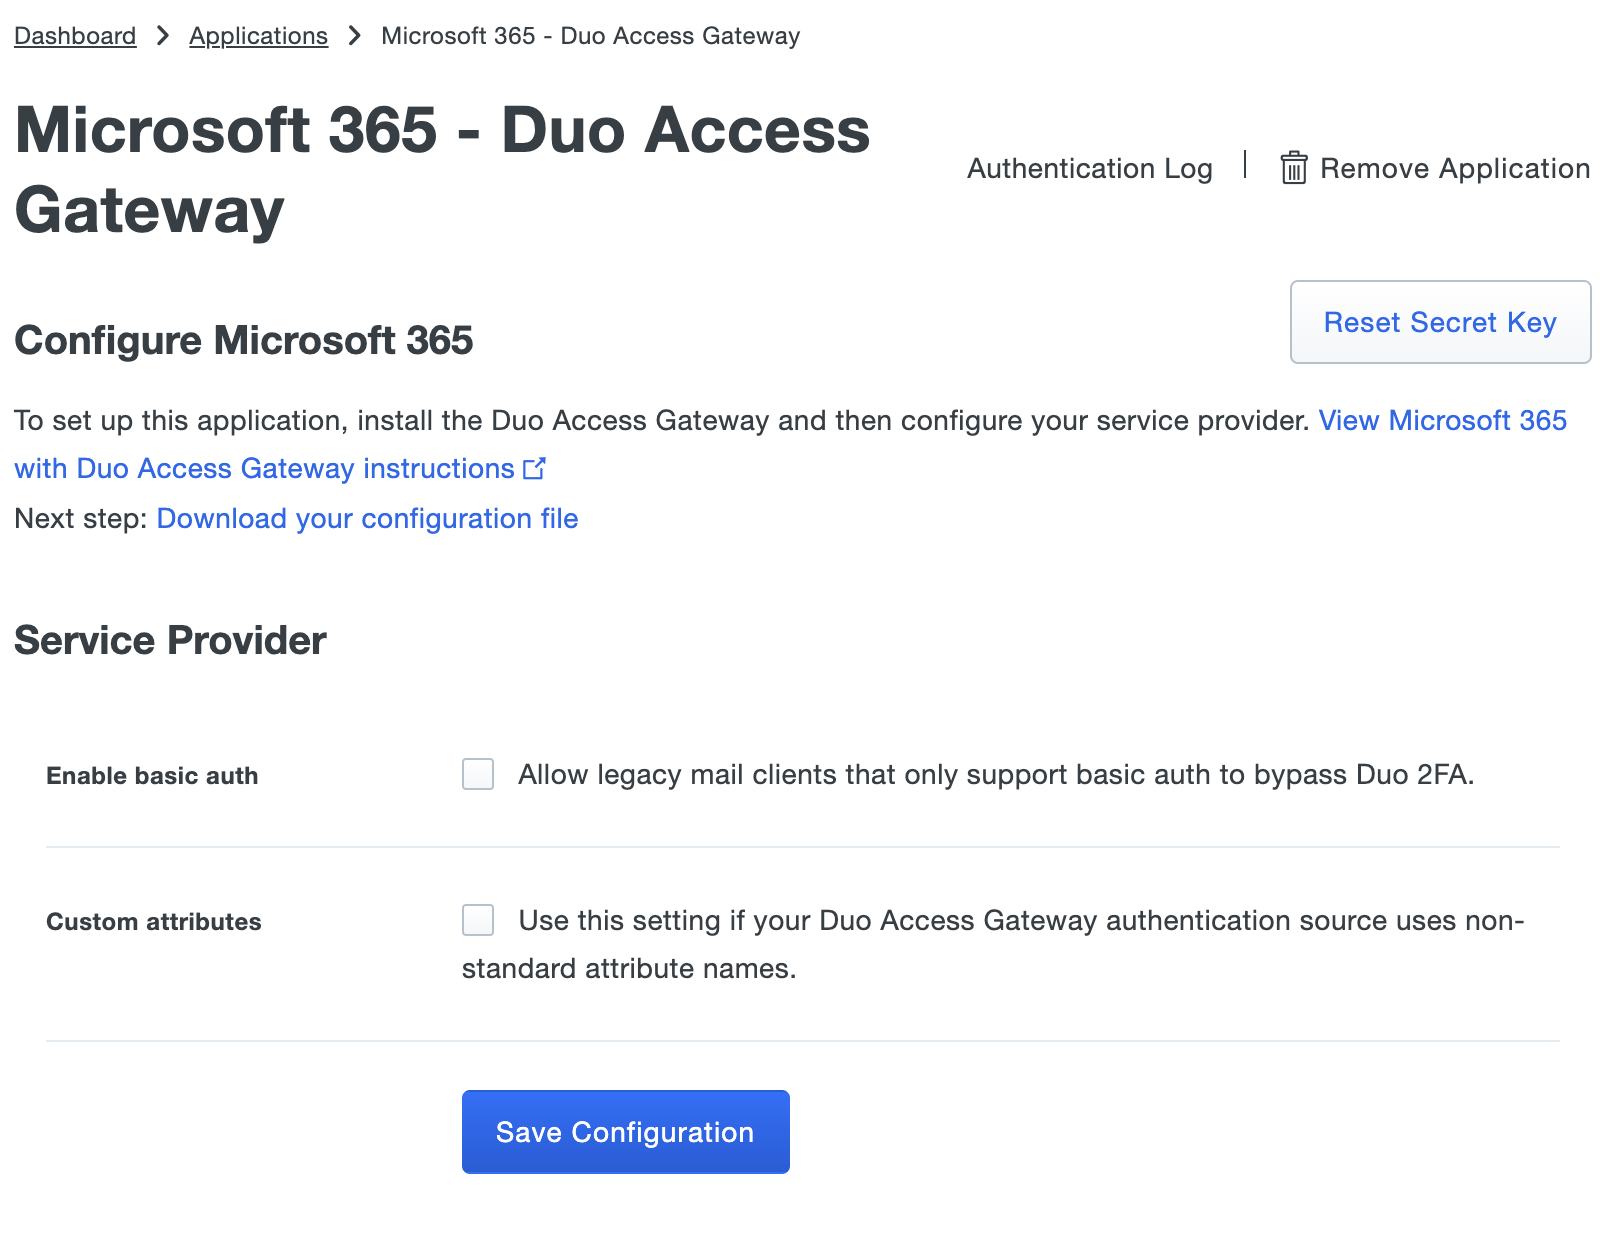 Microsoft 365 Settings for DAG